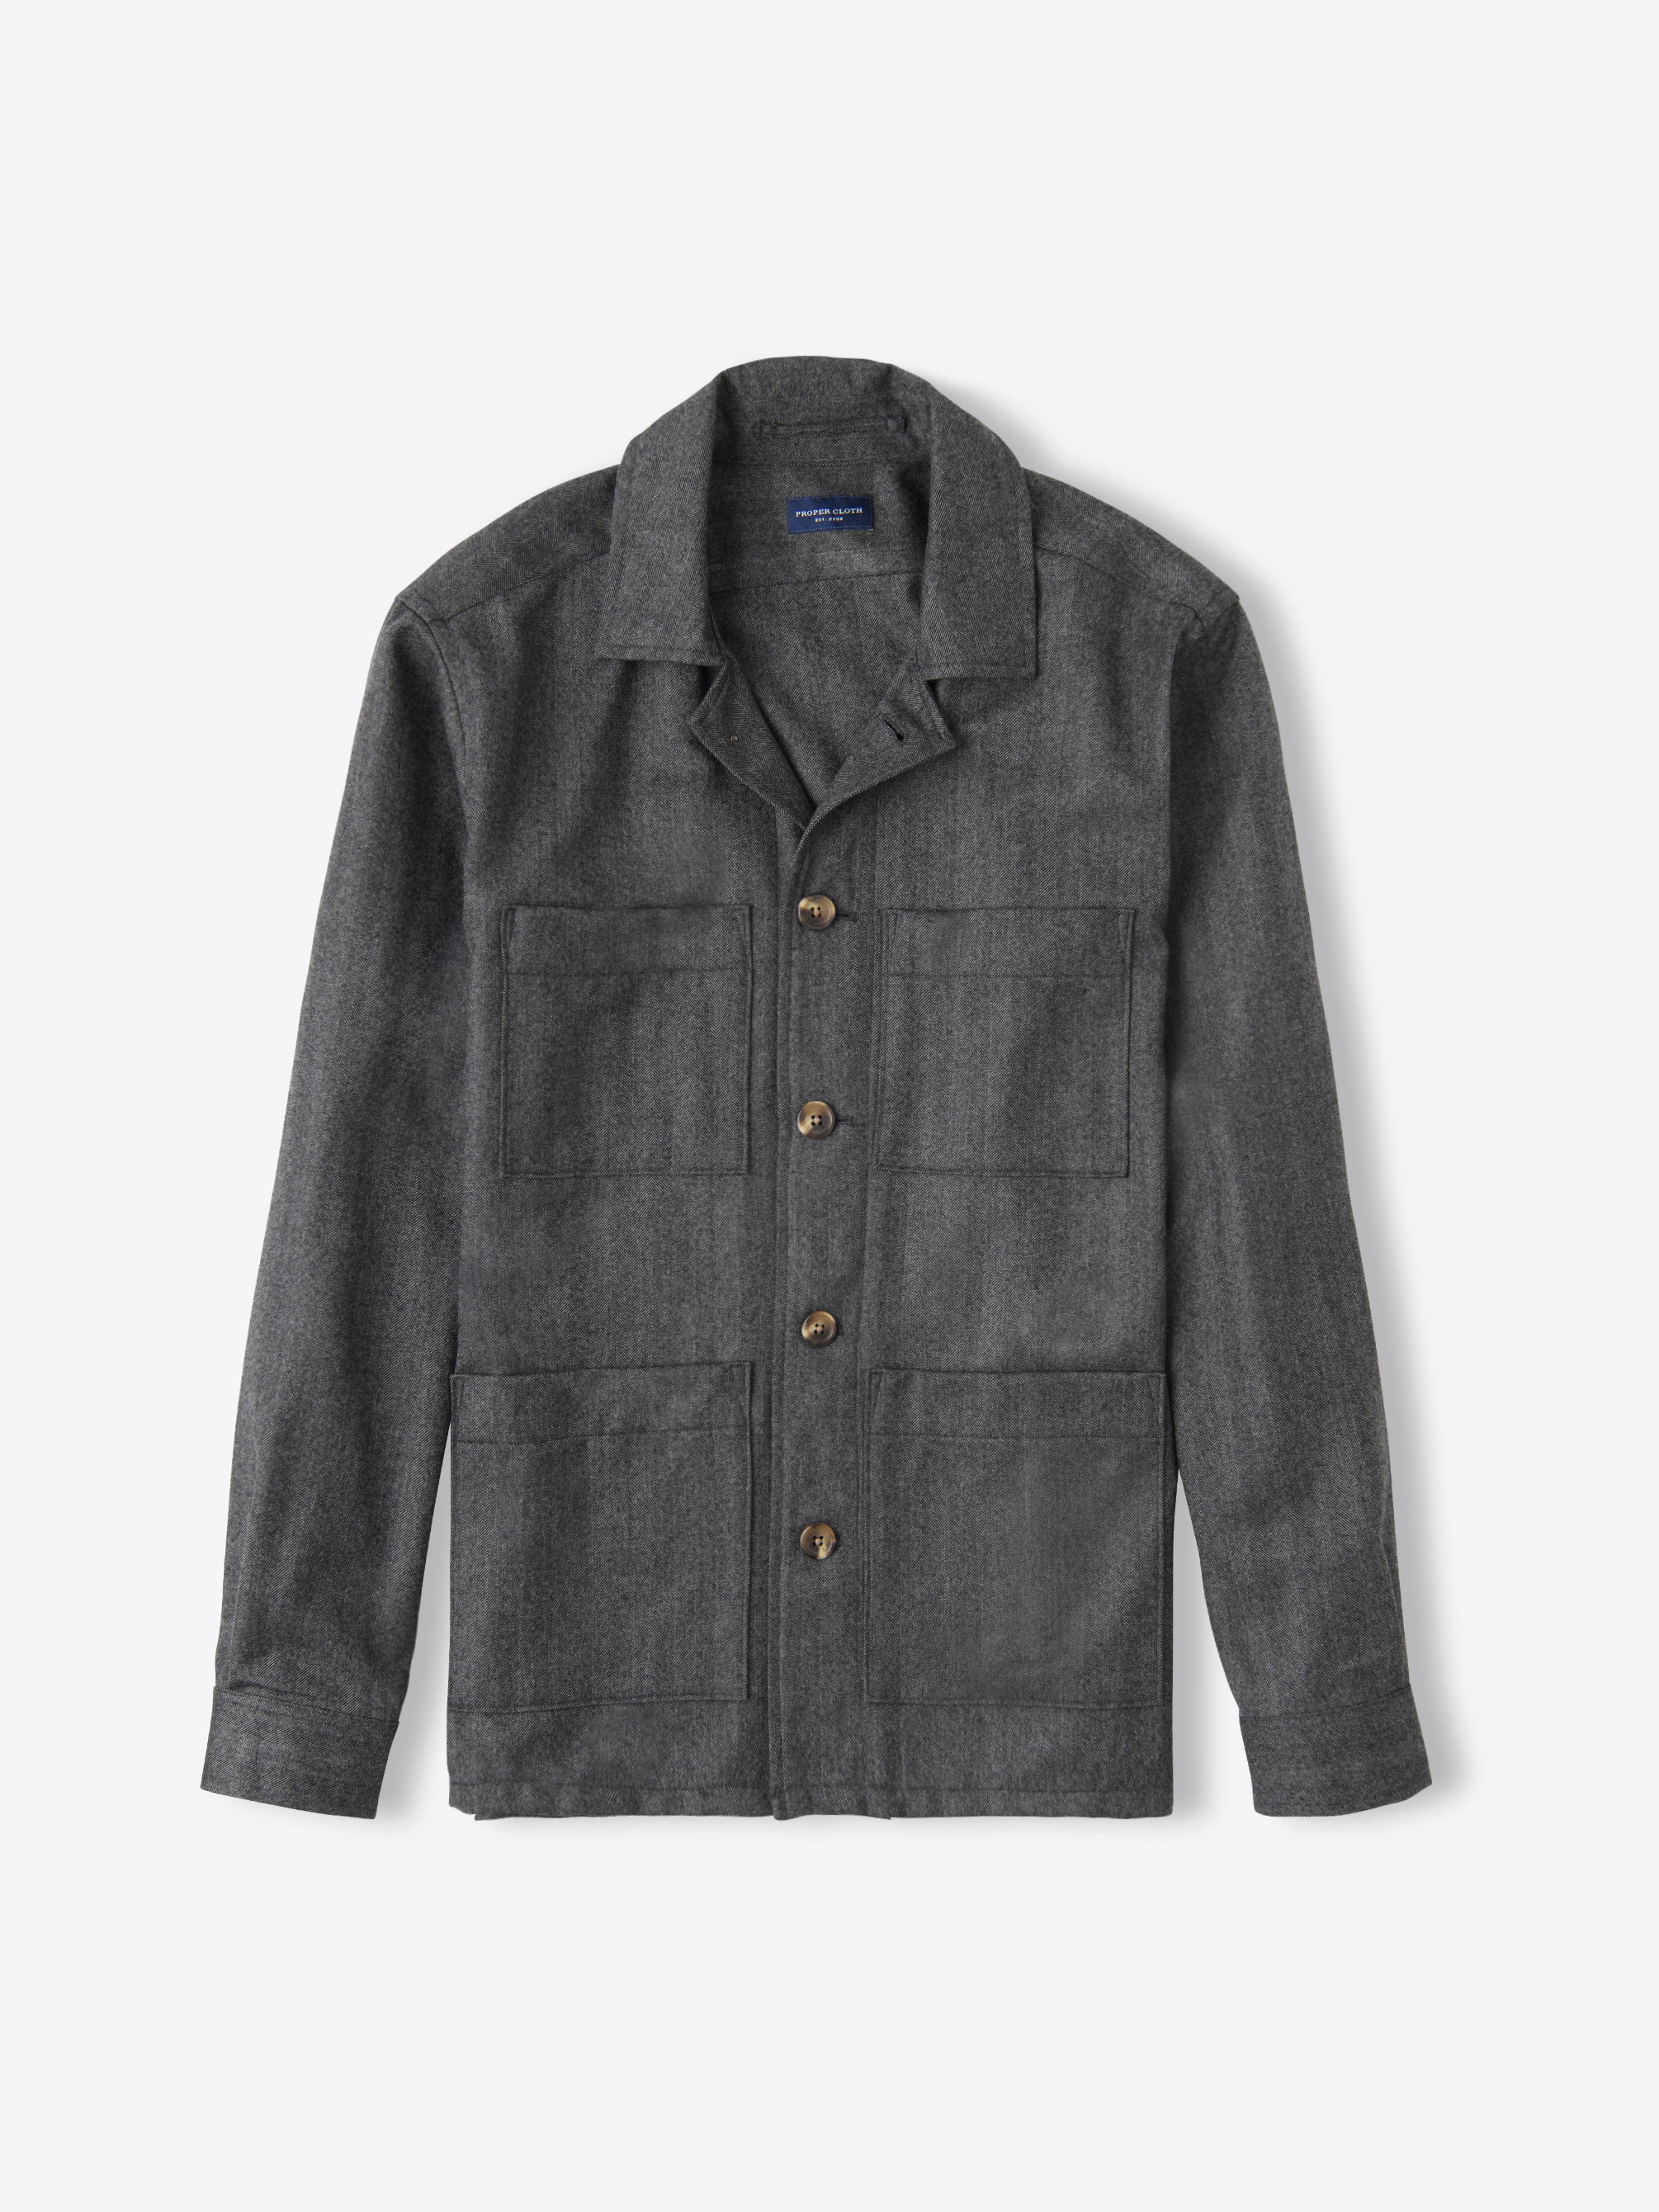 Zoom Image of Charcoal Herringbone Wool Shirt Jacket